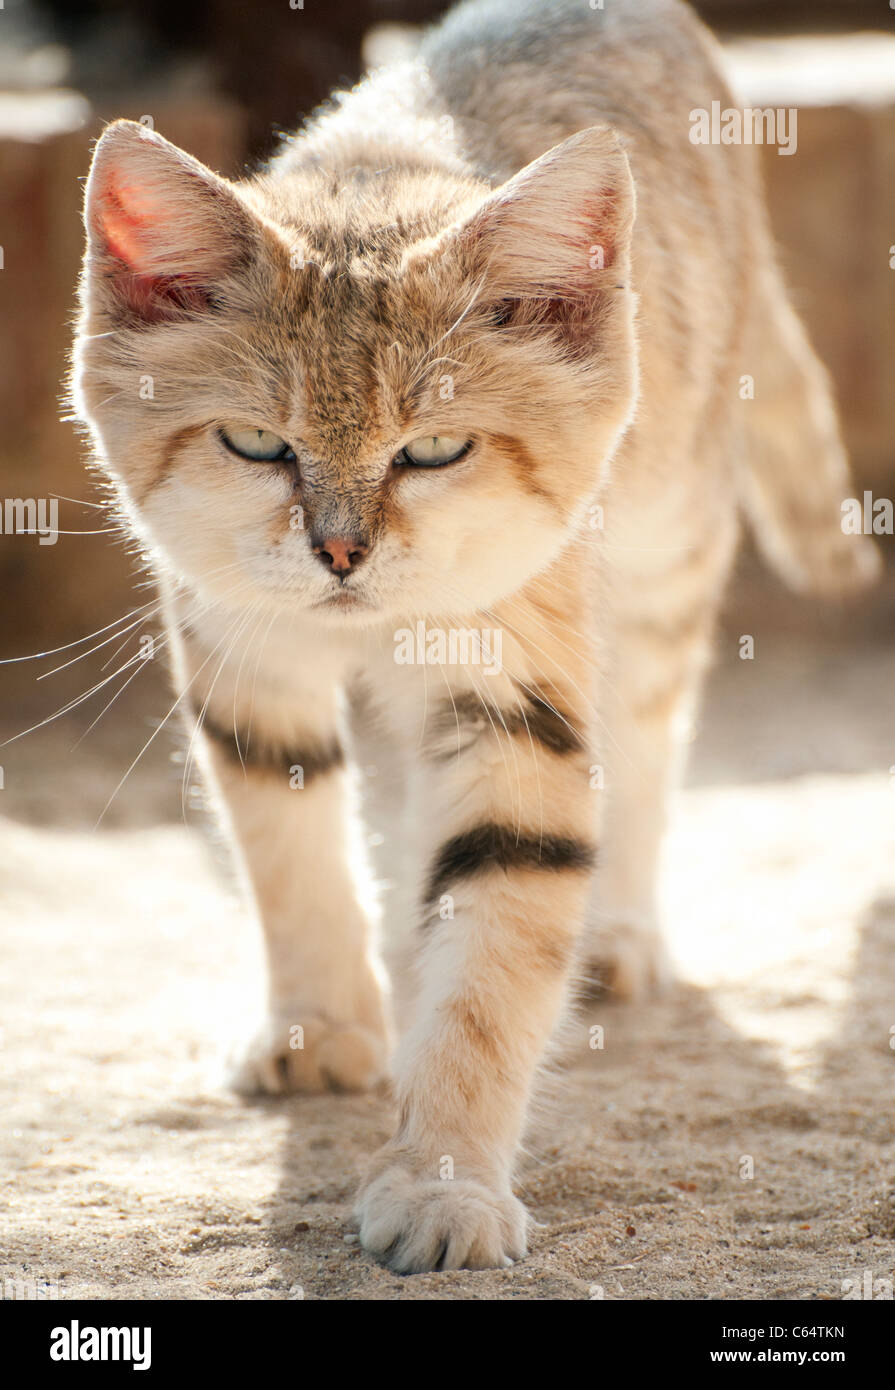 Male Arabian sand cat walking towards camera Stock Photo 38215849 Alamy